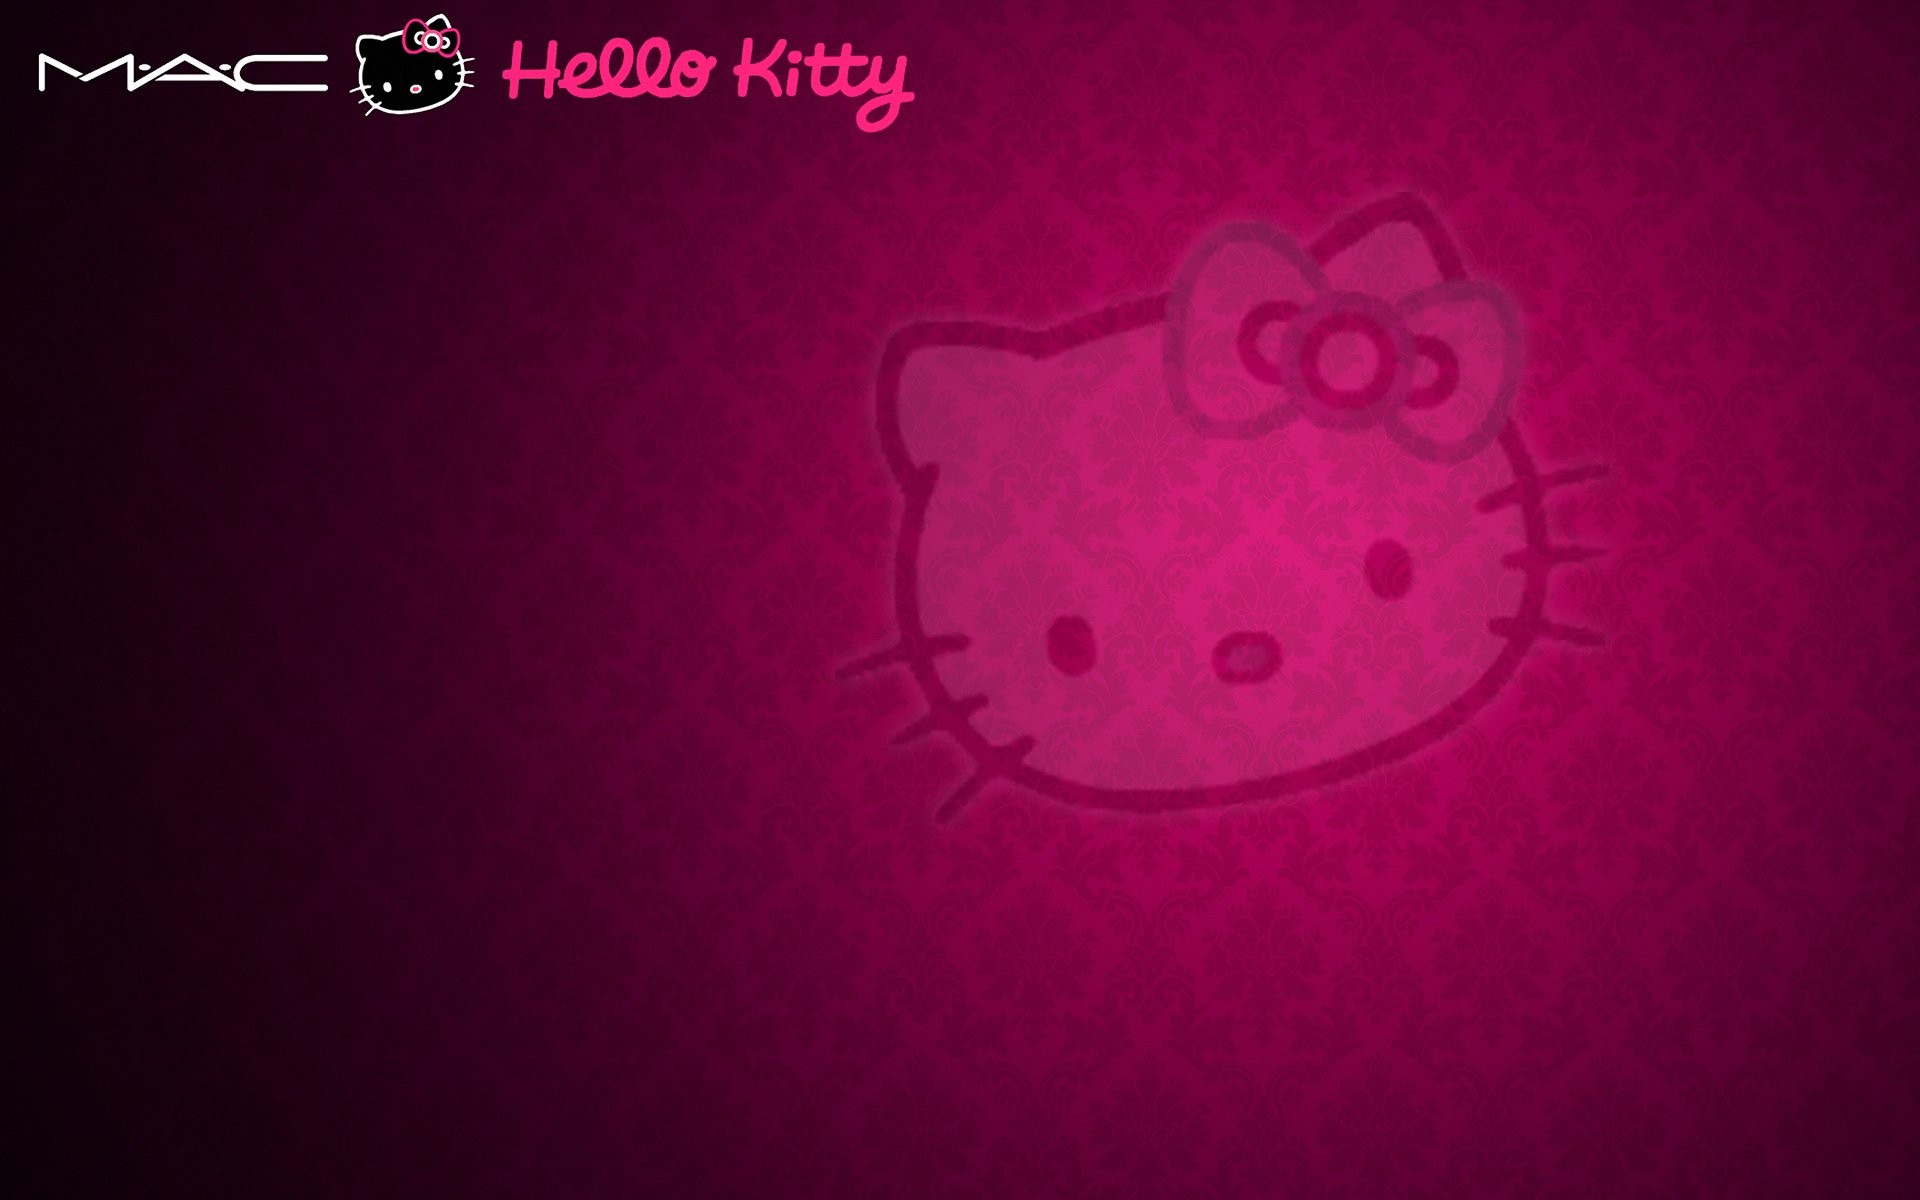 pink hello kitty wallpaper